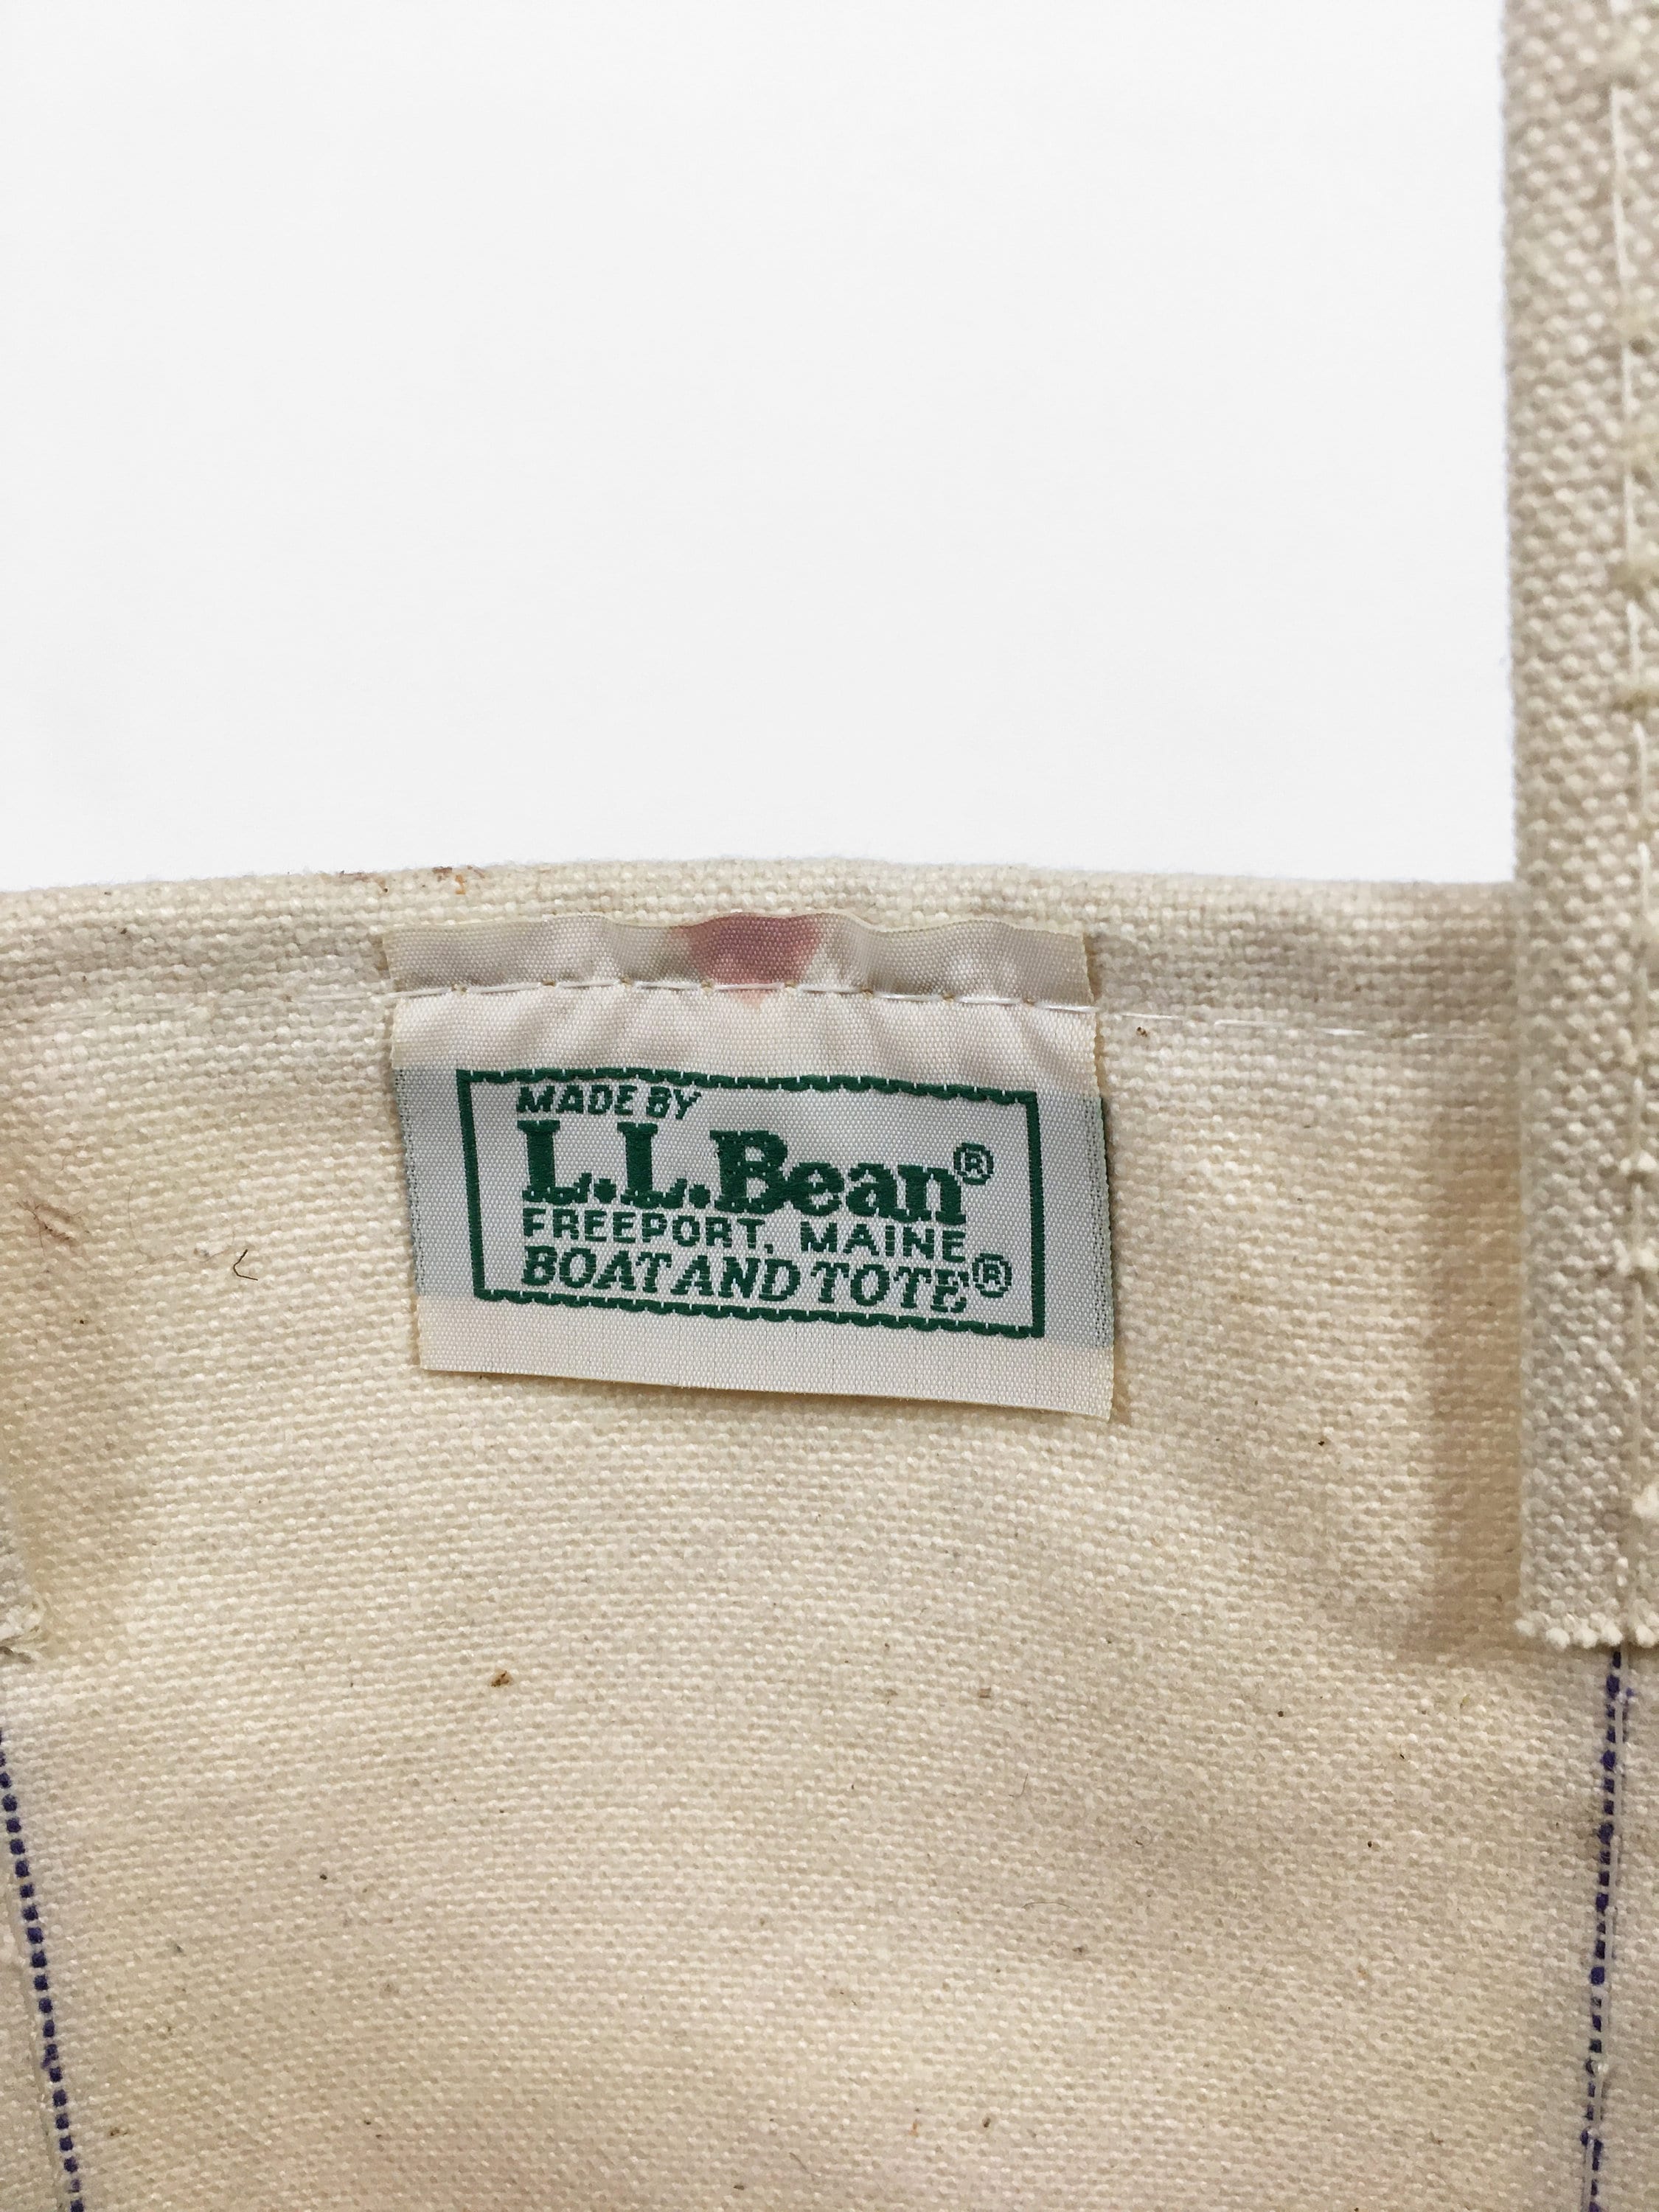 3 LL Bean Boat & Tote Canvas Bags Medium Sizes, Zipper, Freeport Maine  USA